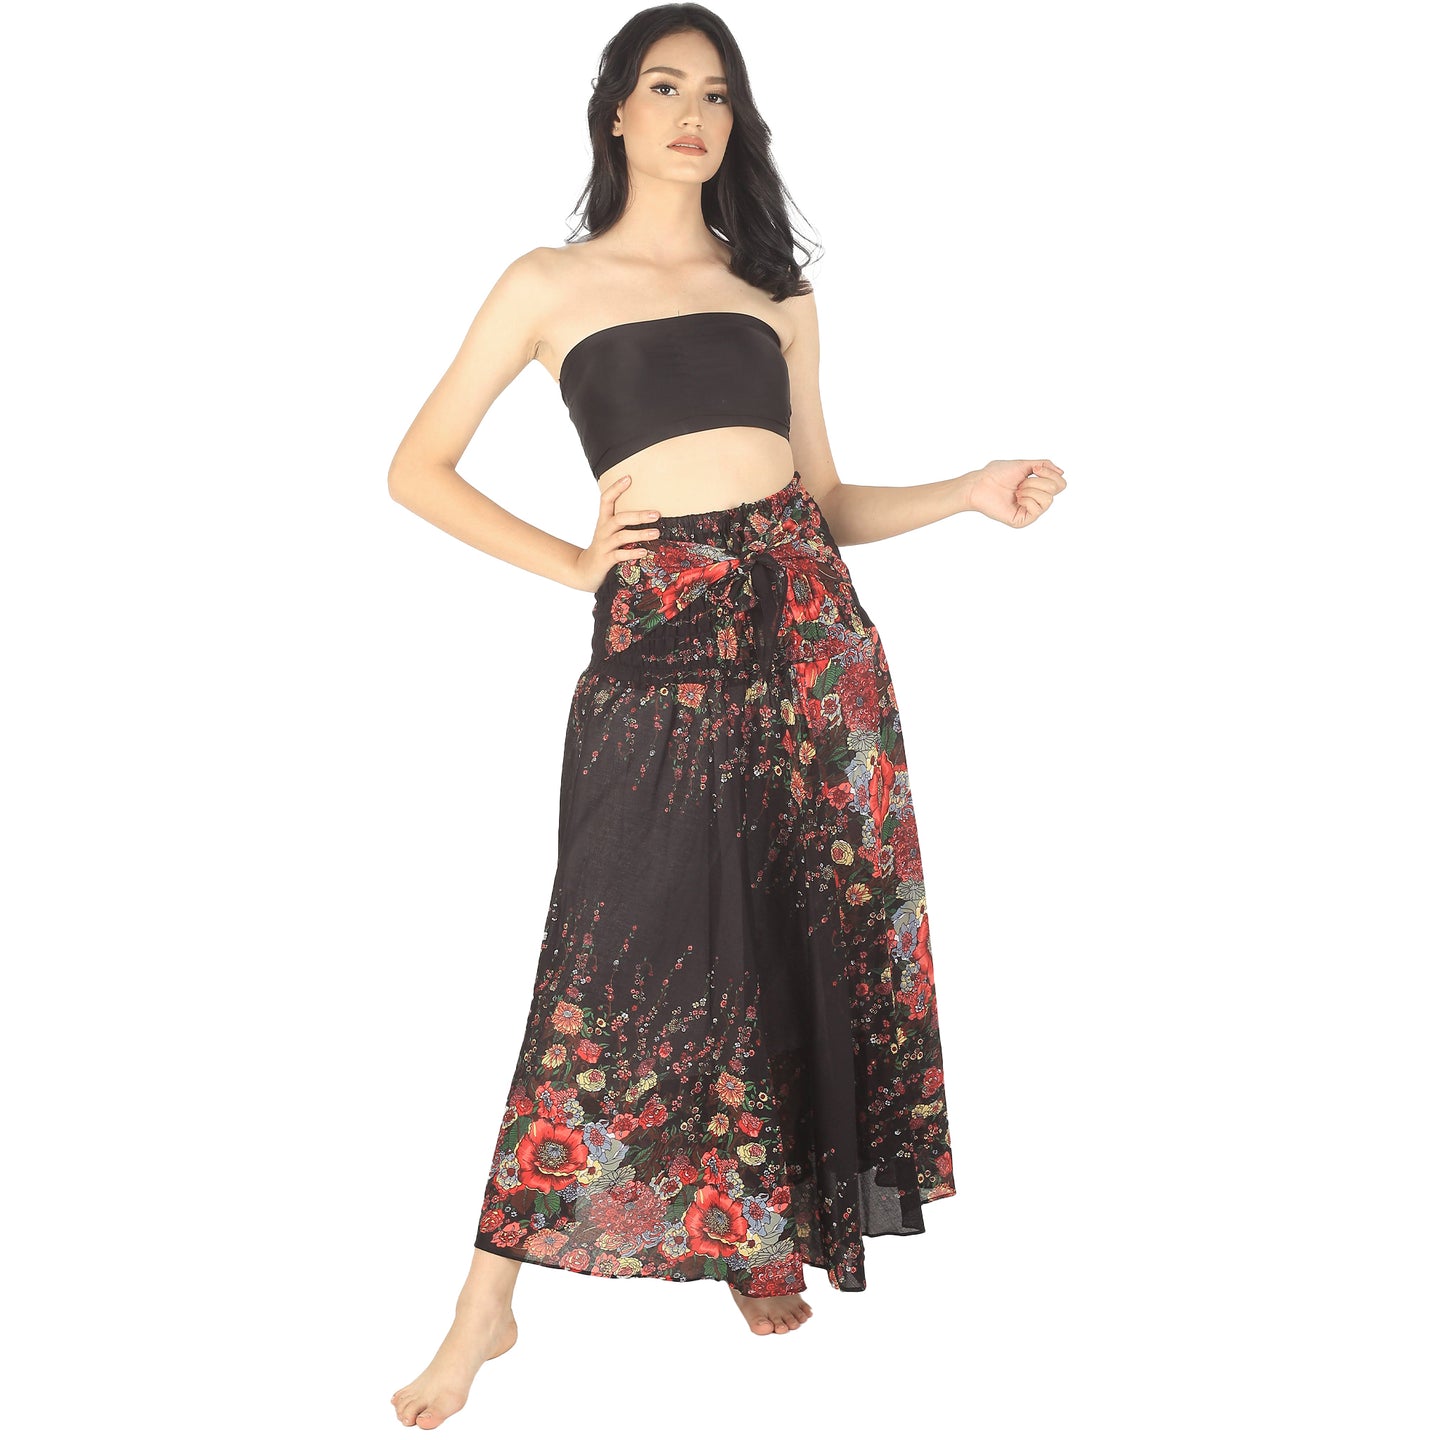 Floral Royal Women's Bohemian Skirt in Black SK0033 020010 01